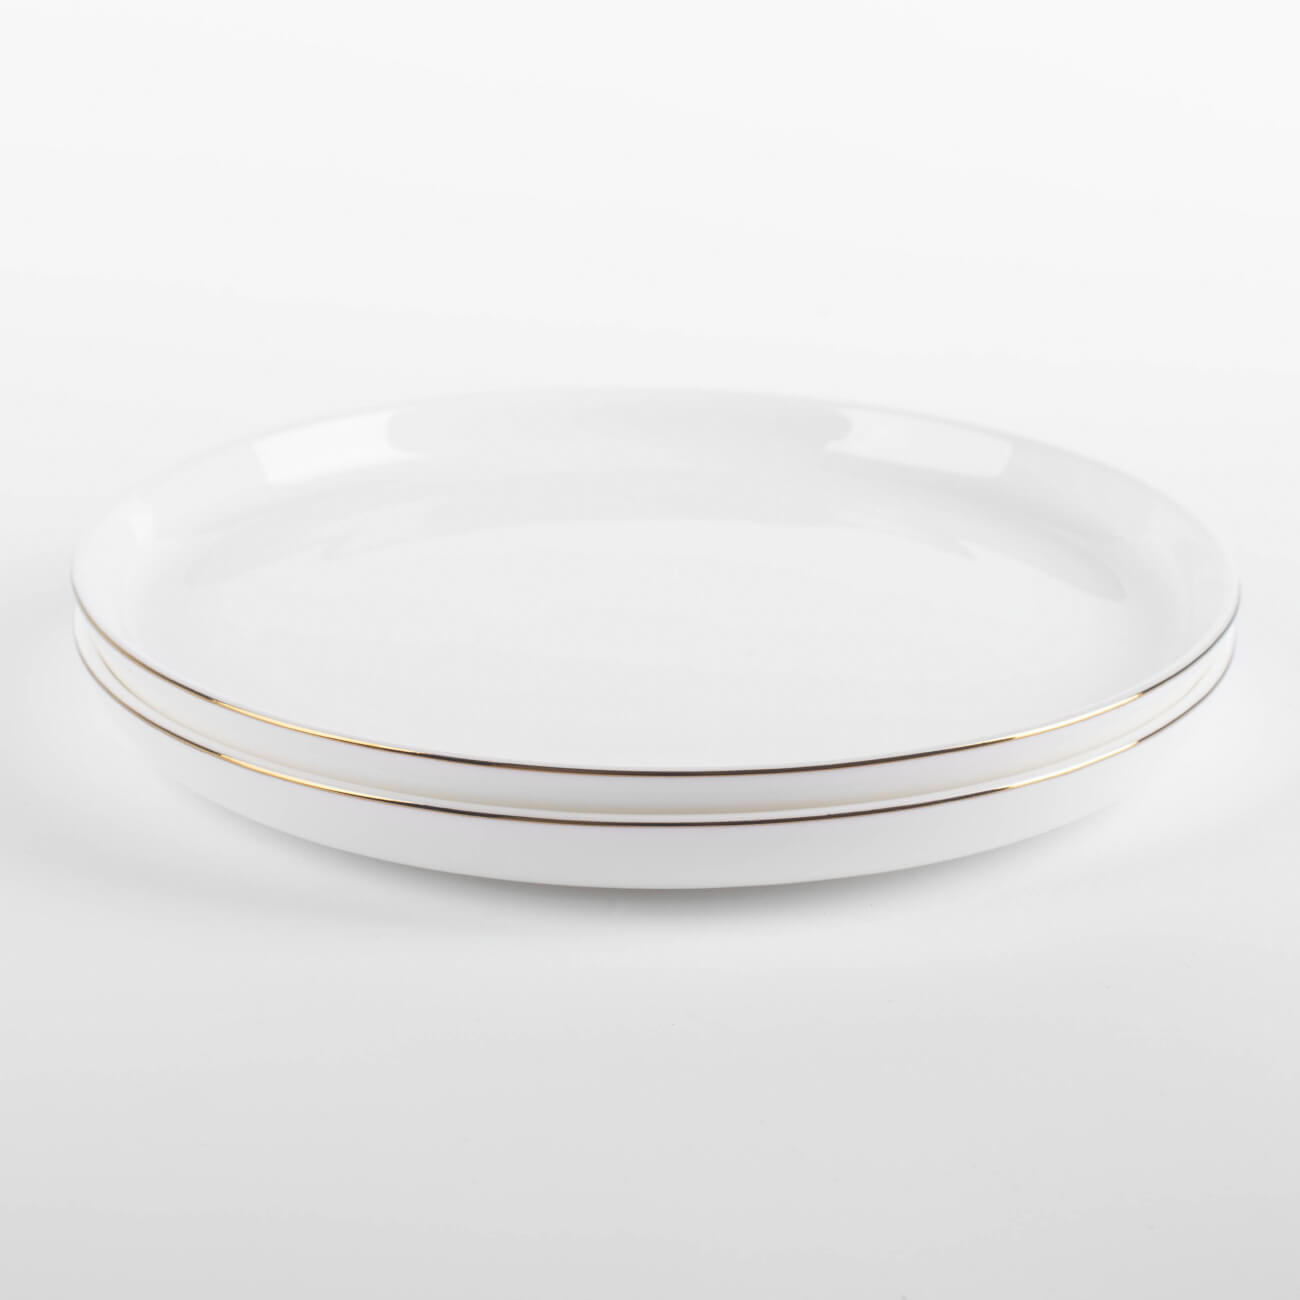 Тарелка десертная, 20 см, 2 шт, фарфор F, белая, Ideal gold тарелка десертная noritake монтвейл 16 5 см